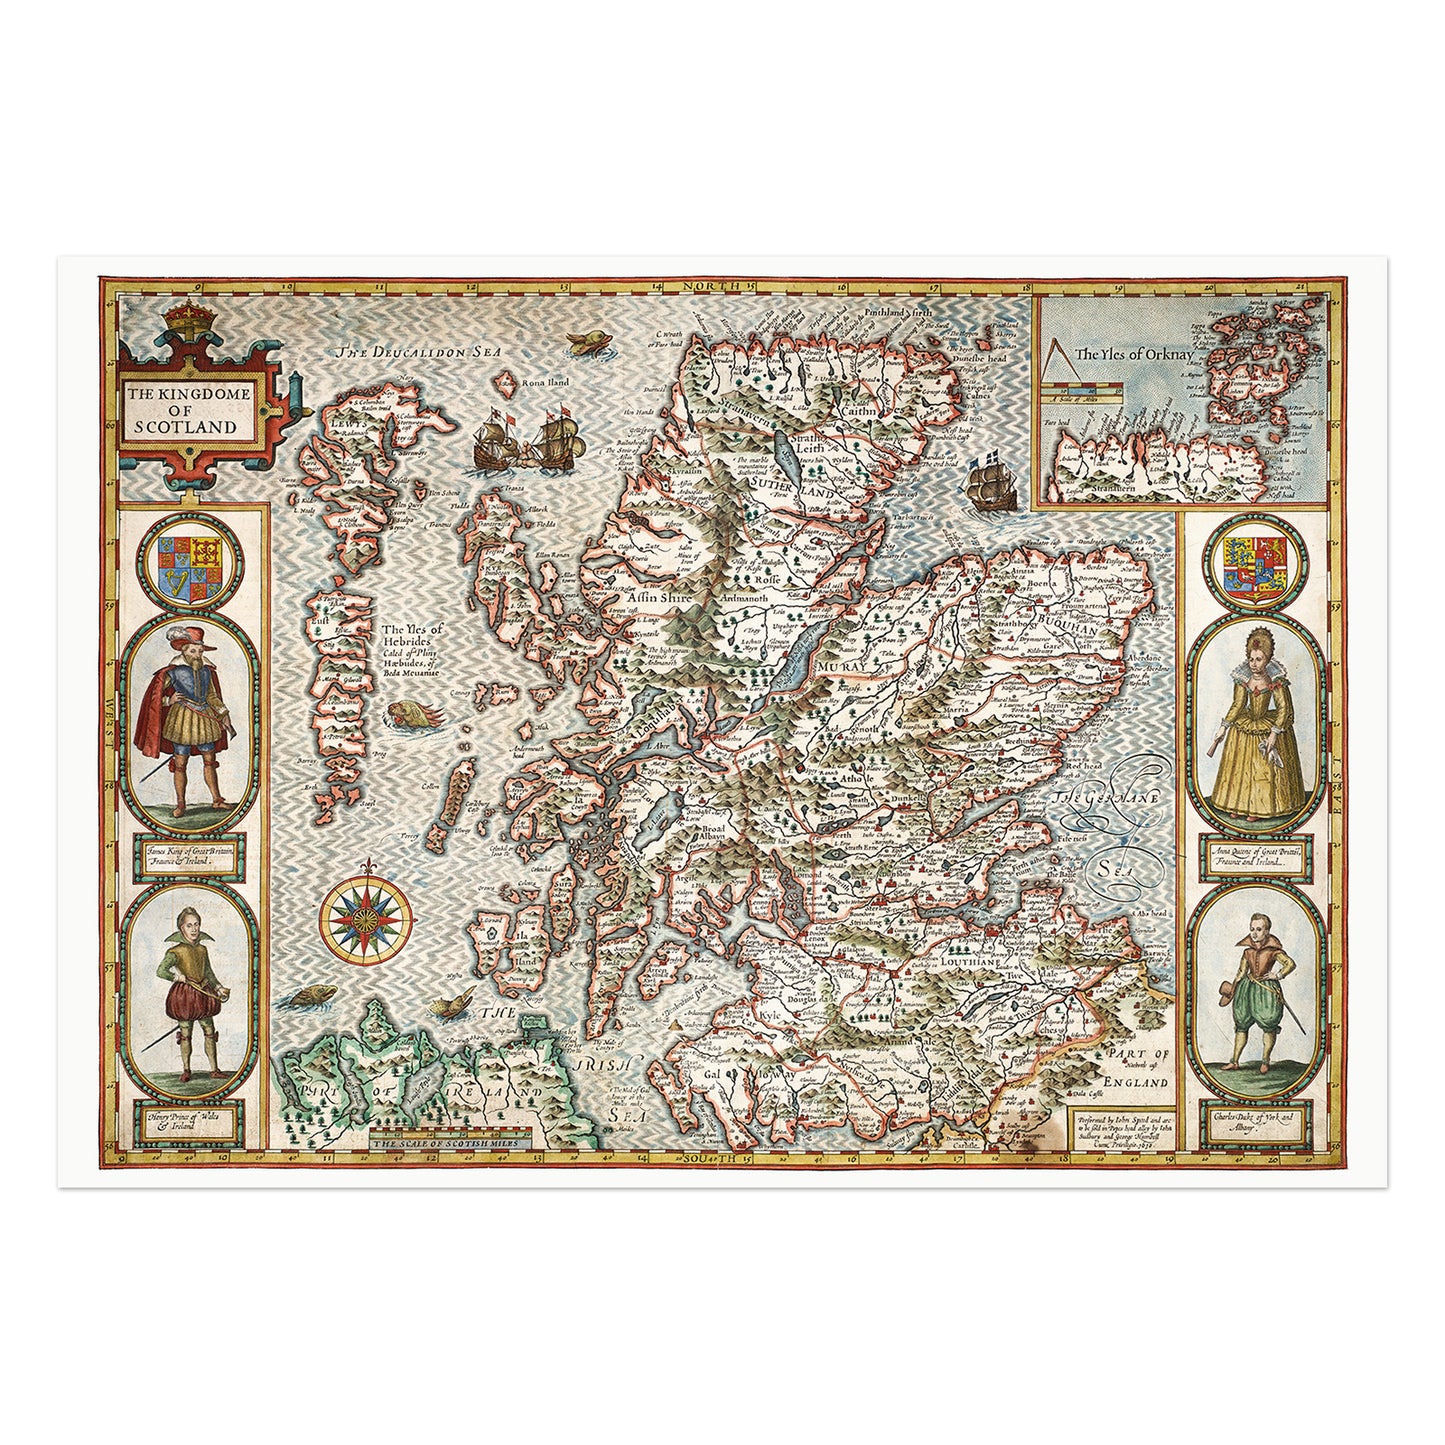 The Kingdome of Scotland by John Speed